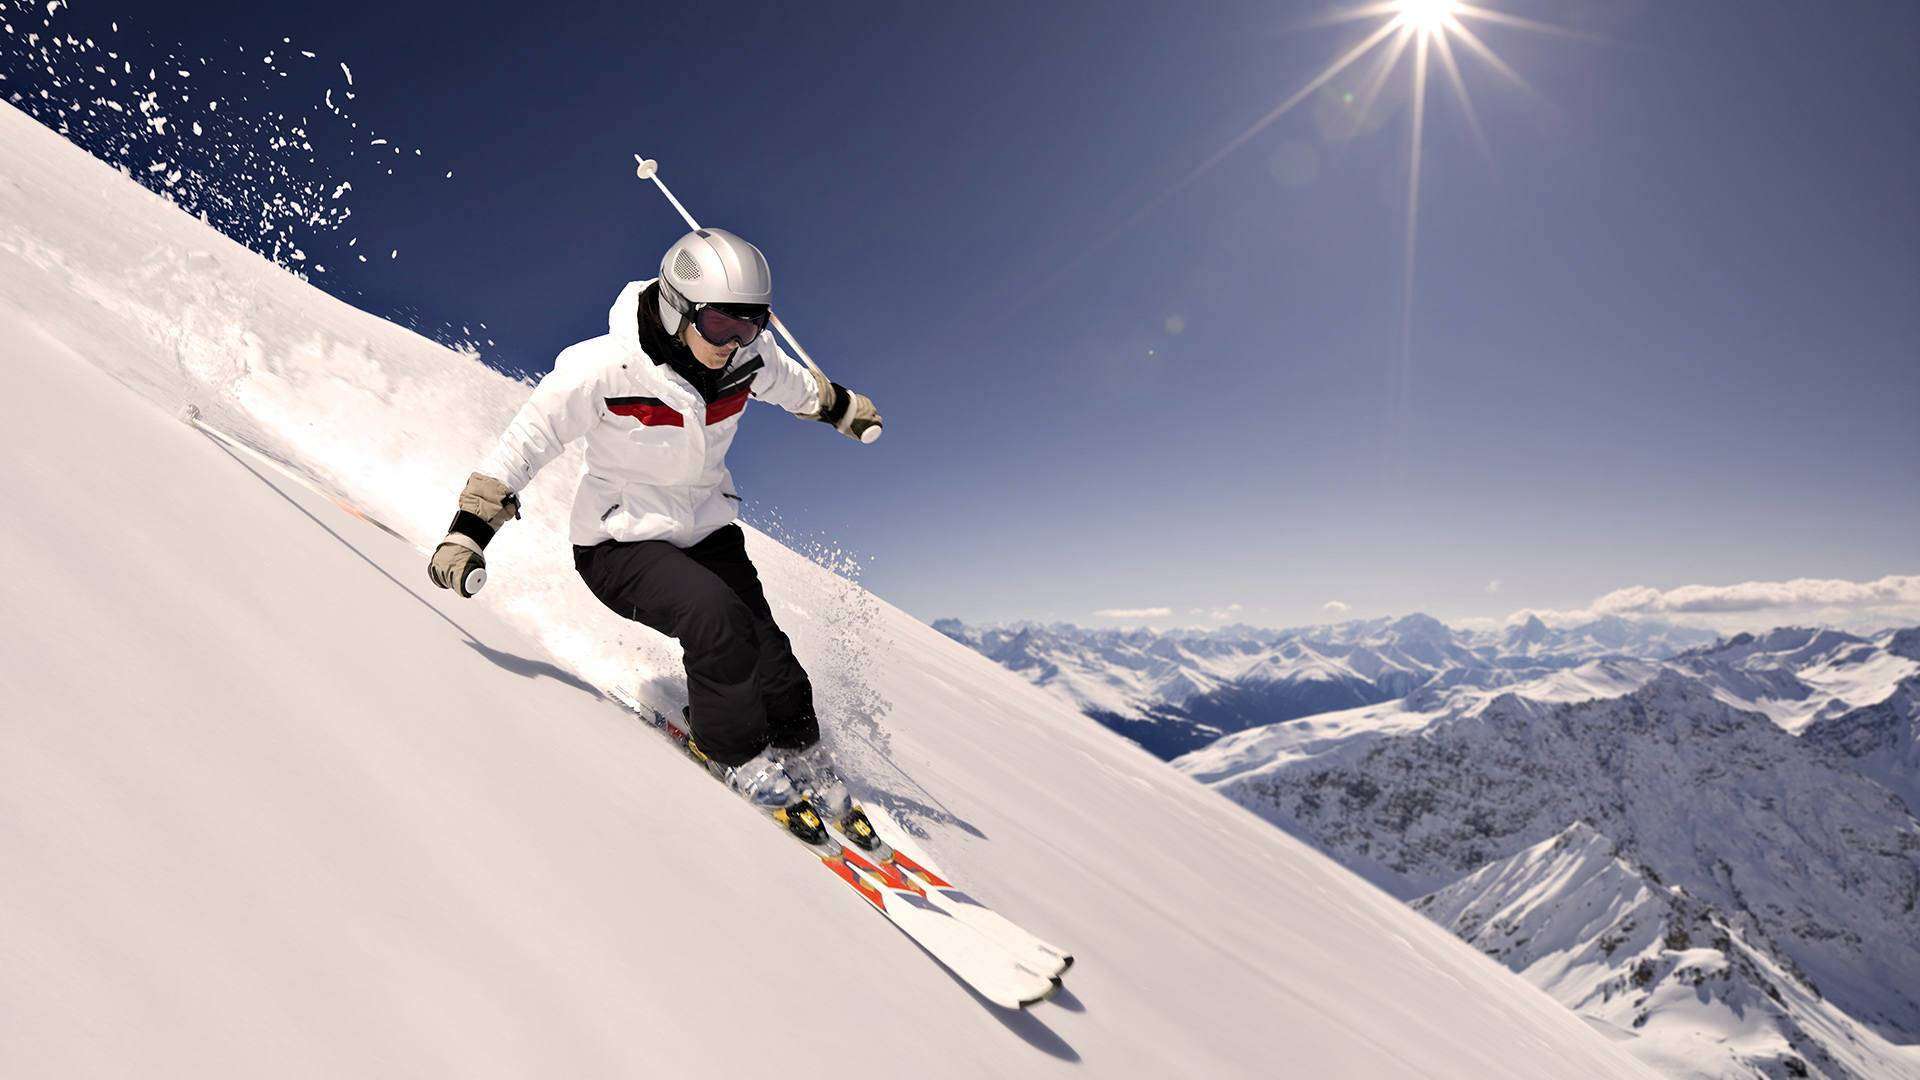 hd-snowboarding-wallpapers-9664-hd-wallpapers-download.jpg